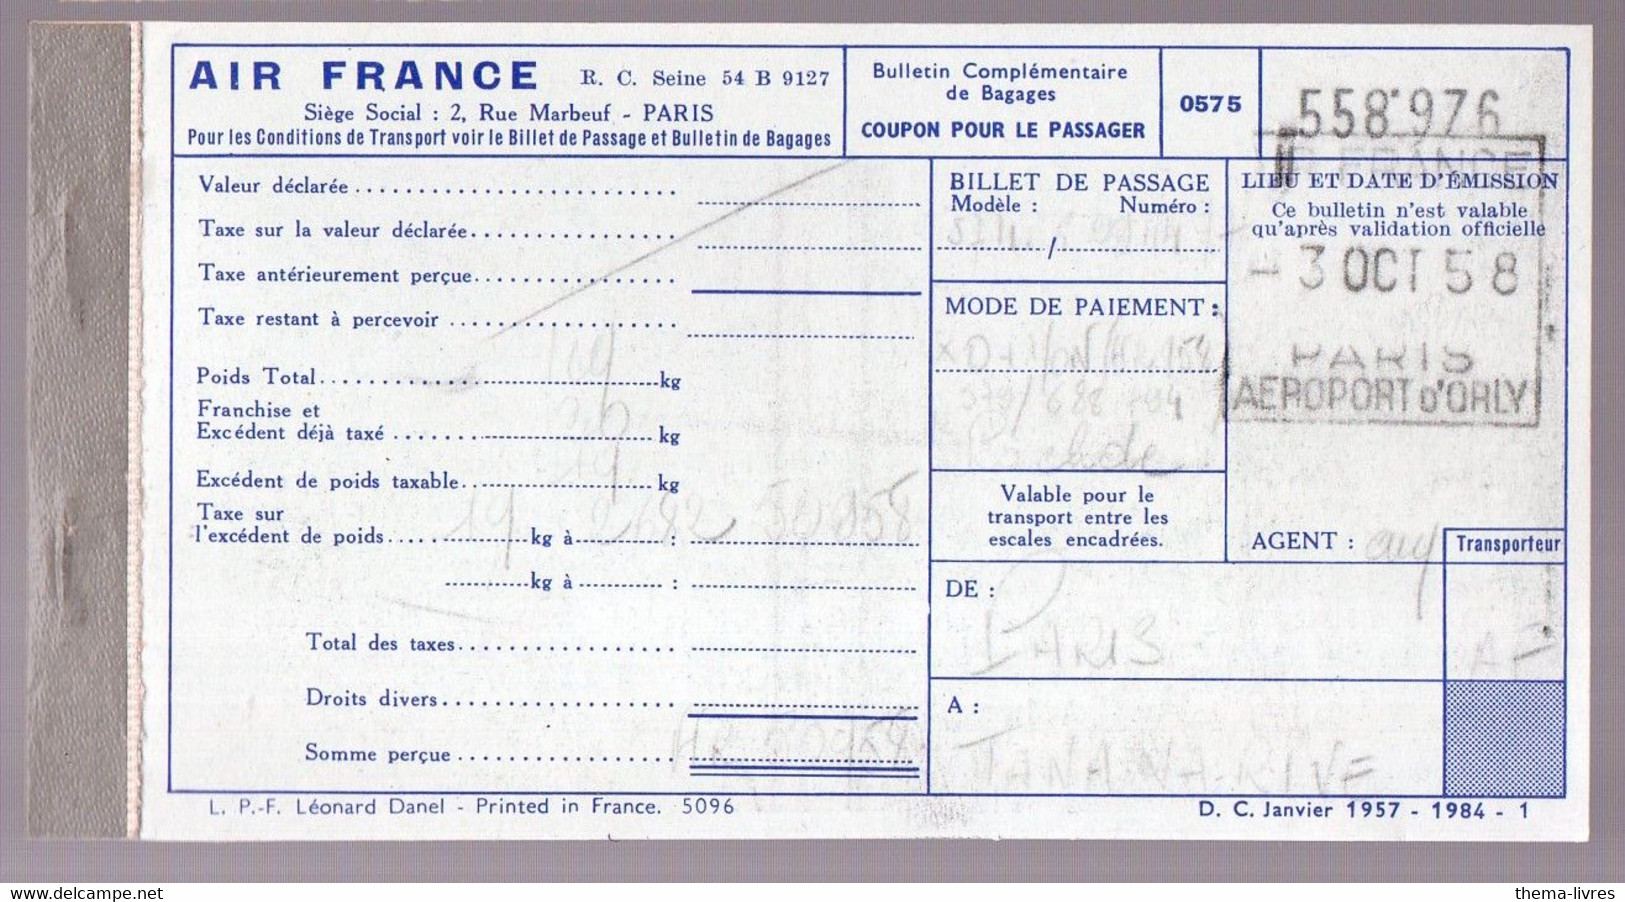 Billet AIR FRANCE  1958 PARIS TANANARIVE   (PPP27807) - Monde